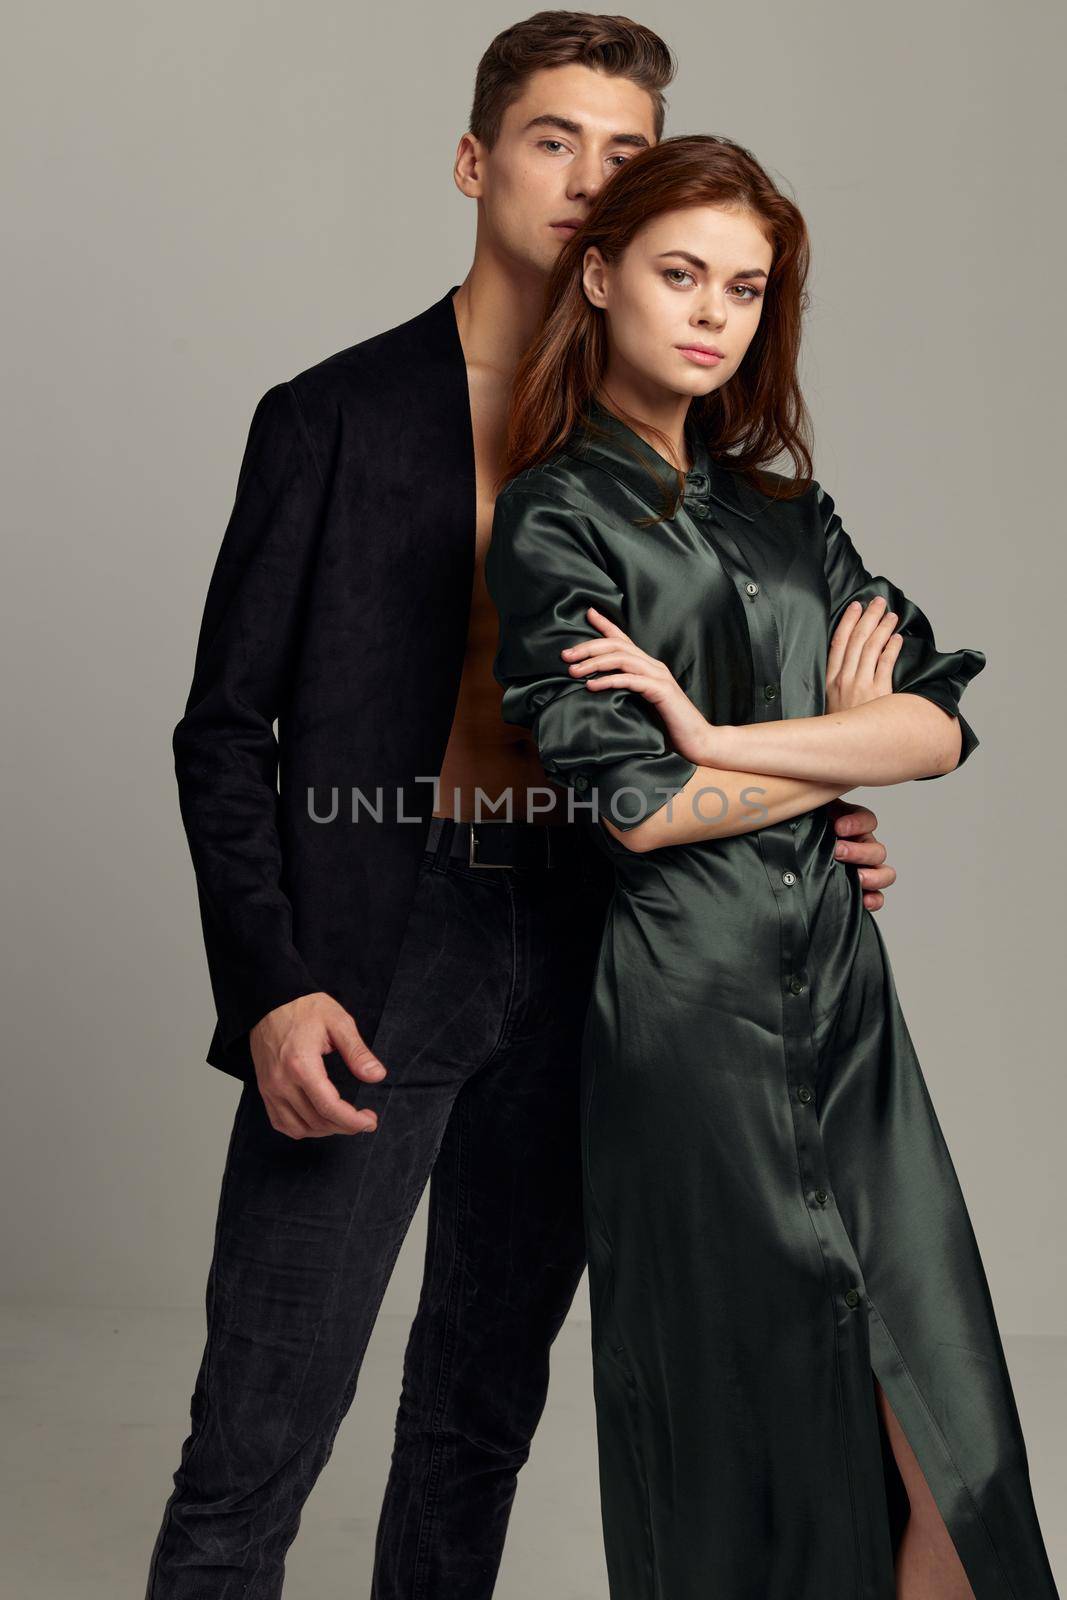 cute young couple attitude luxury elegant style attractiveness studio. High quality photo